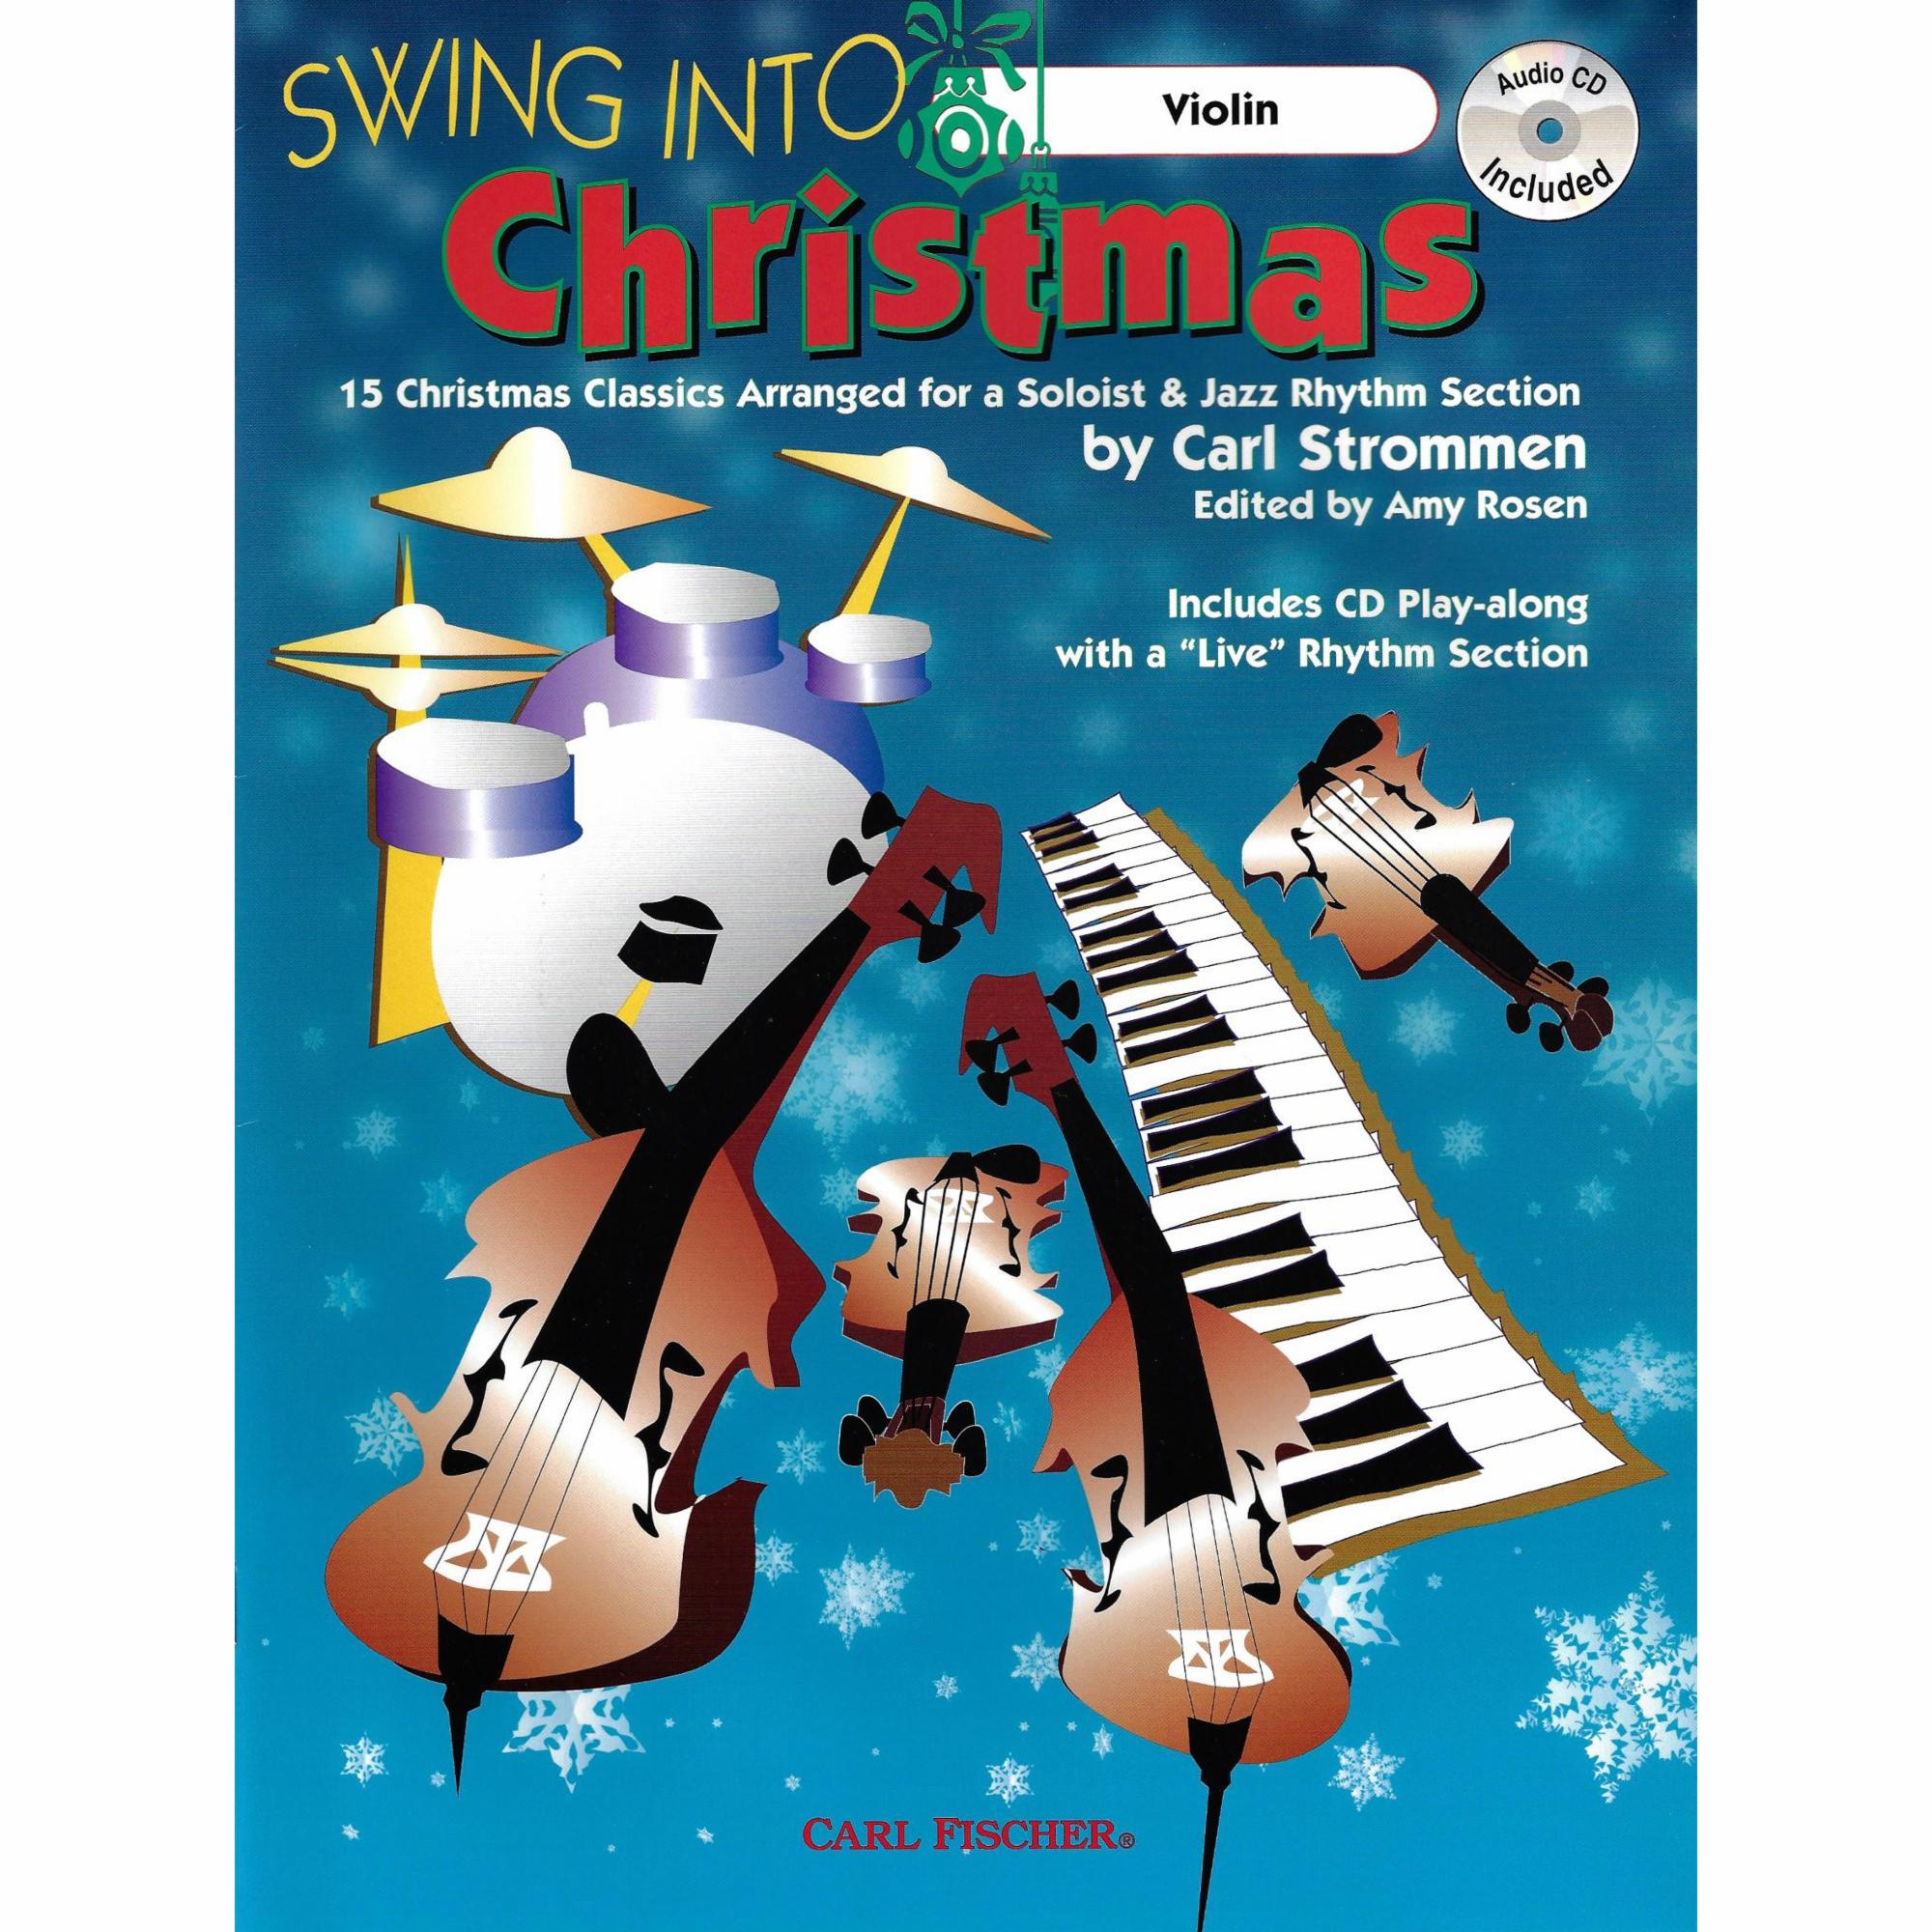 Swing Into Christmas for Violin, Viola, or Cello